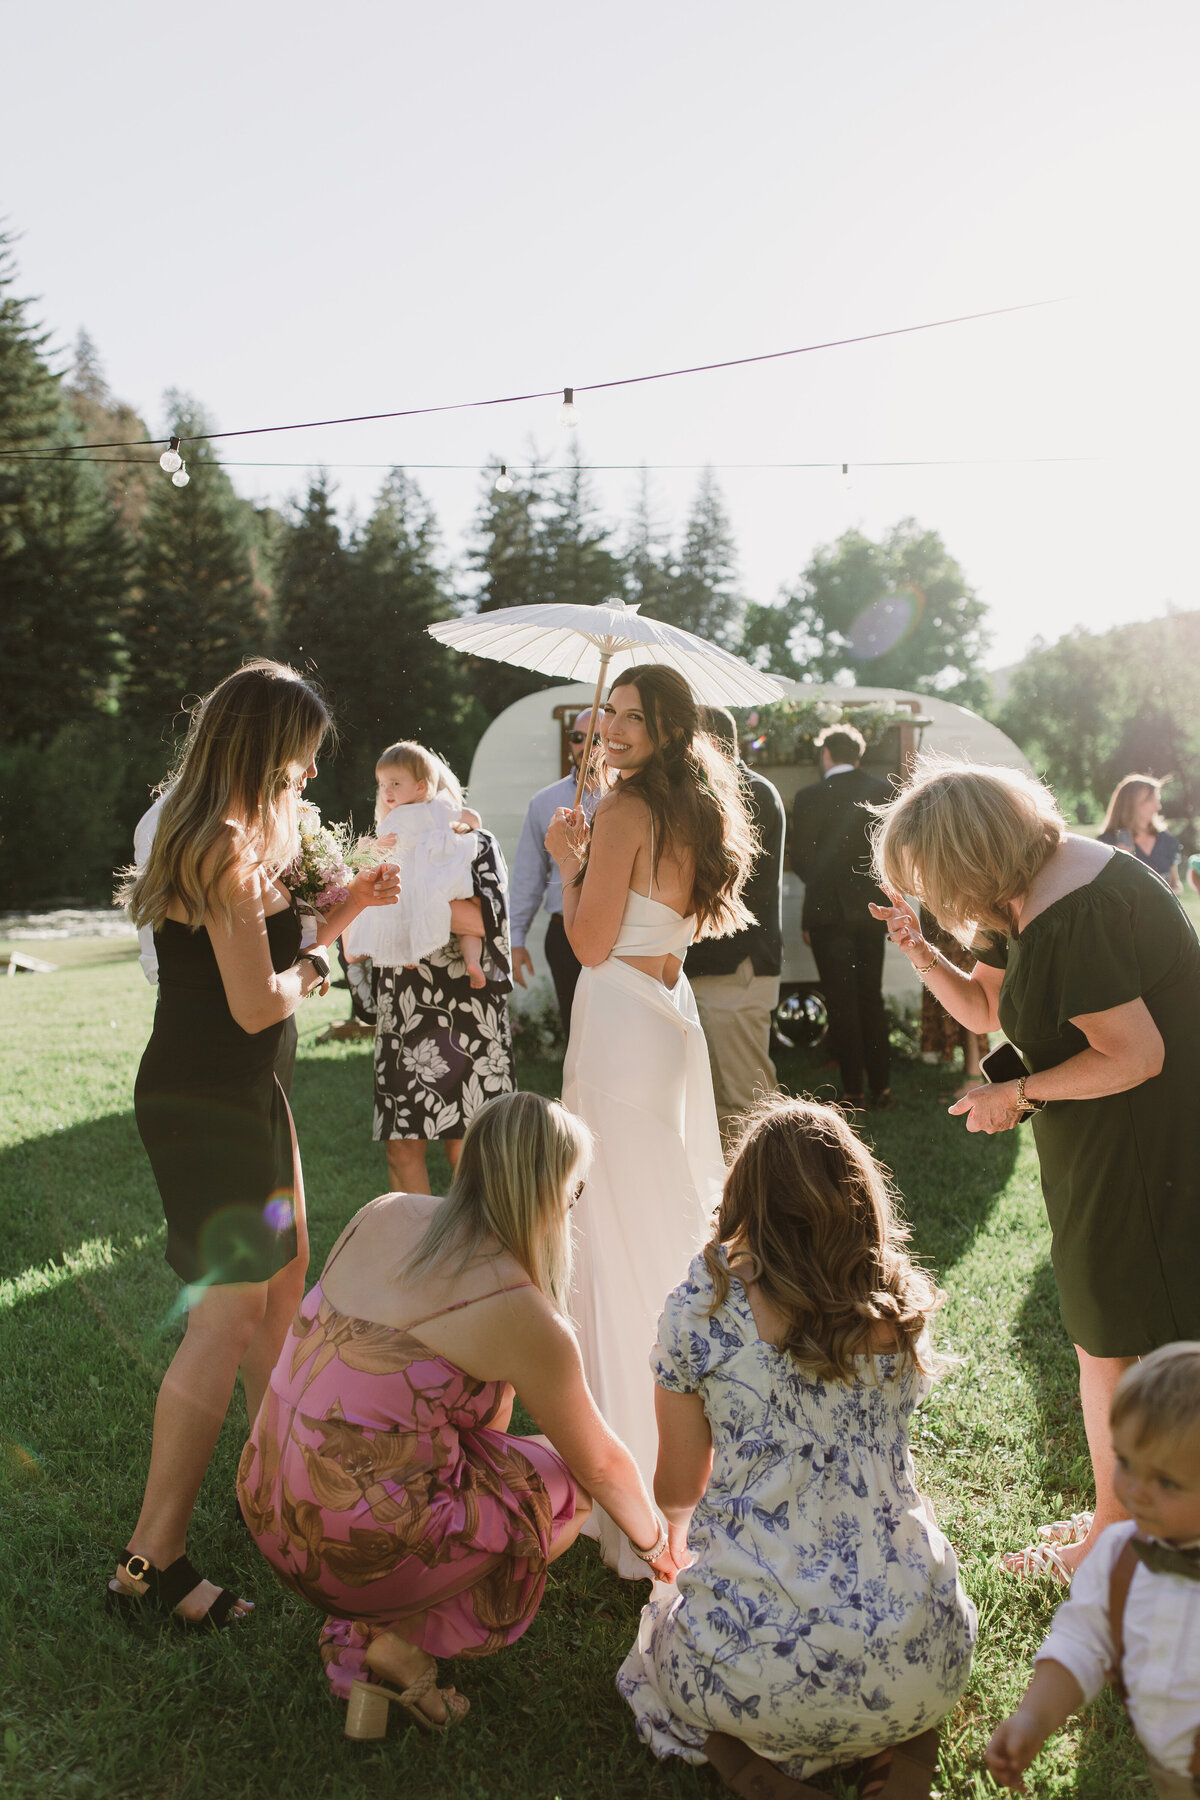 Women surrounding bride as they fan out her dress